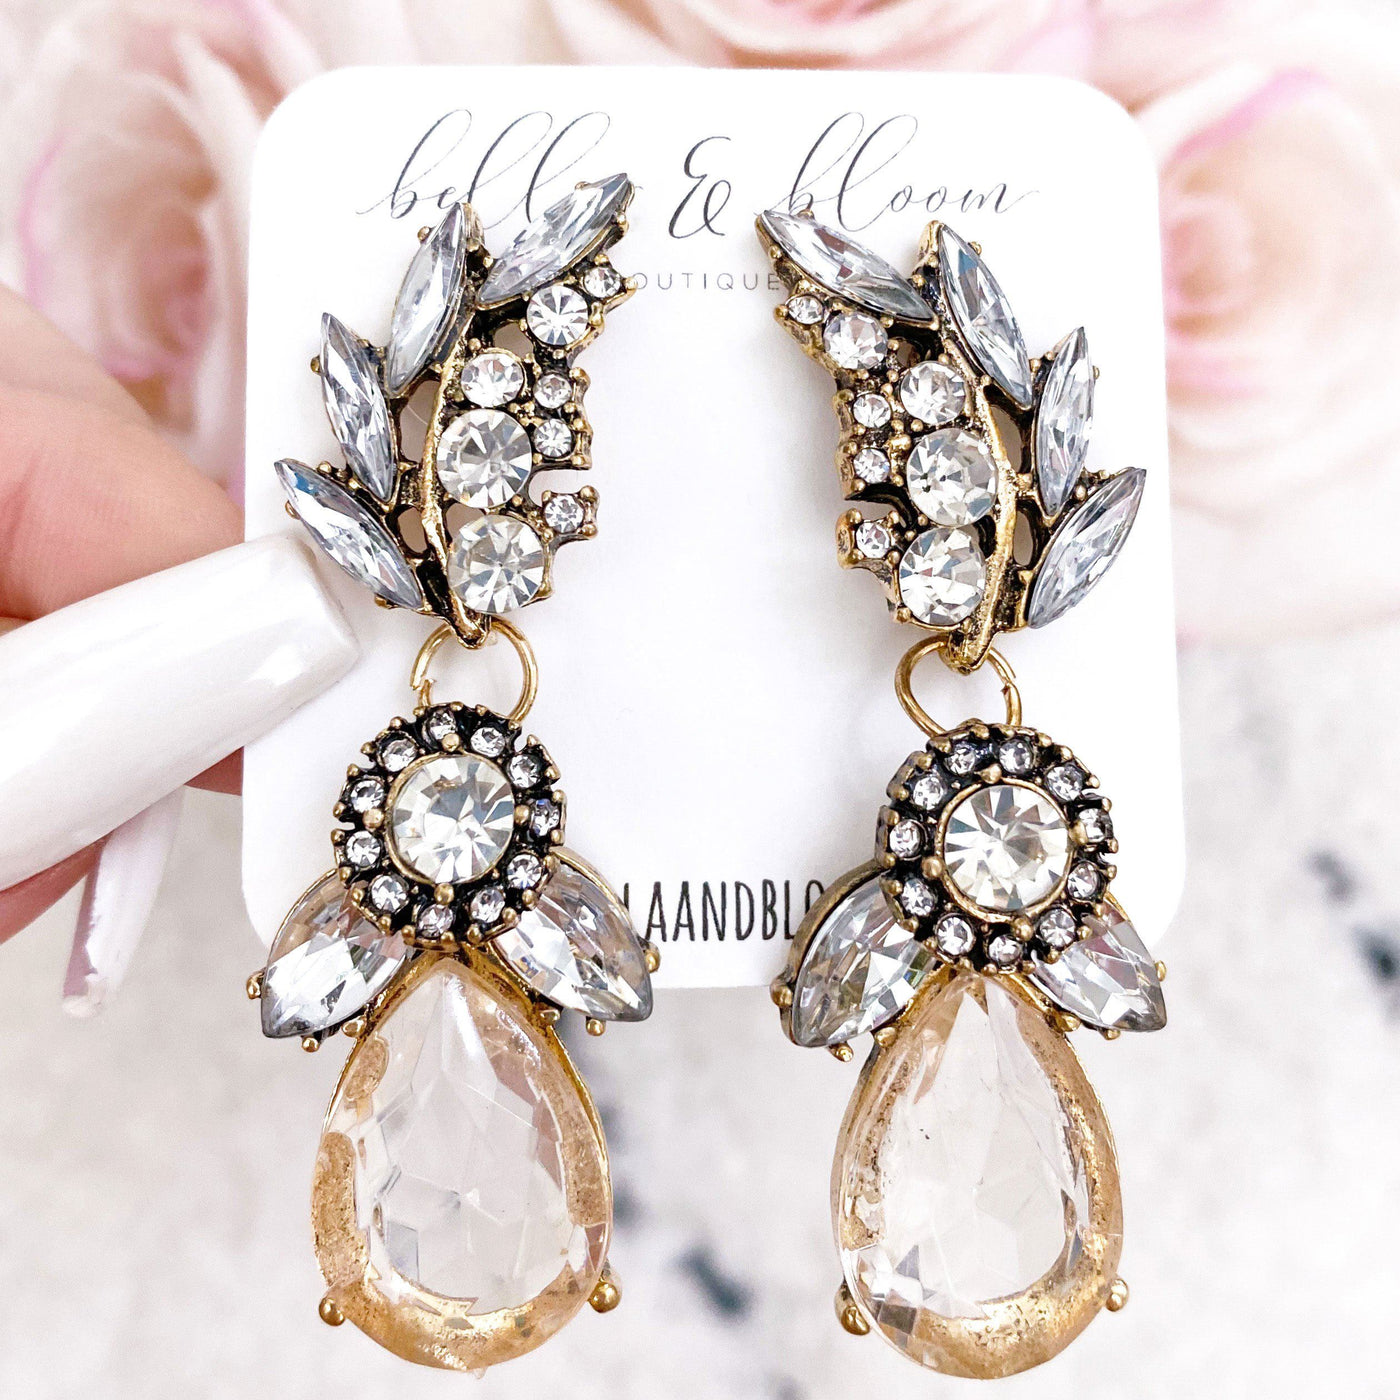 Katlyn's Bridal Earrings: Champagne/Crystal - Bella and Bloom Boutique